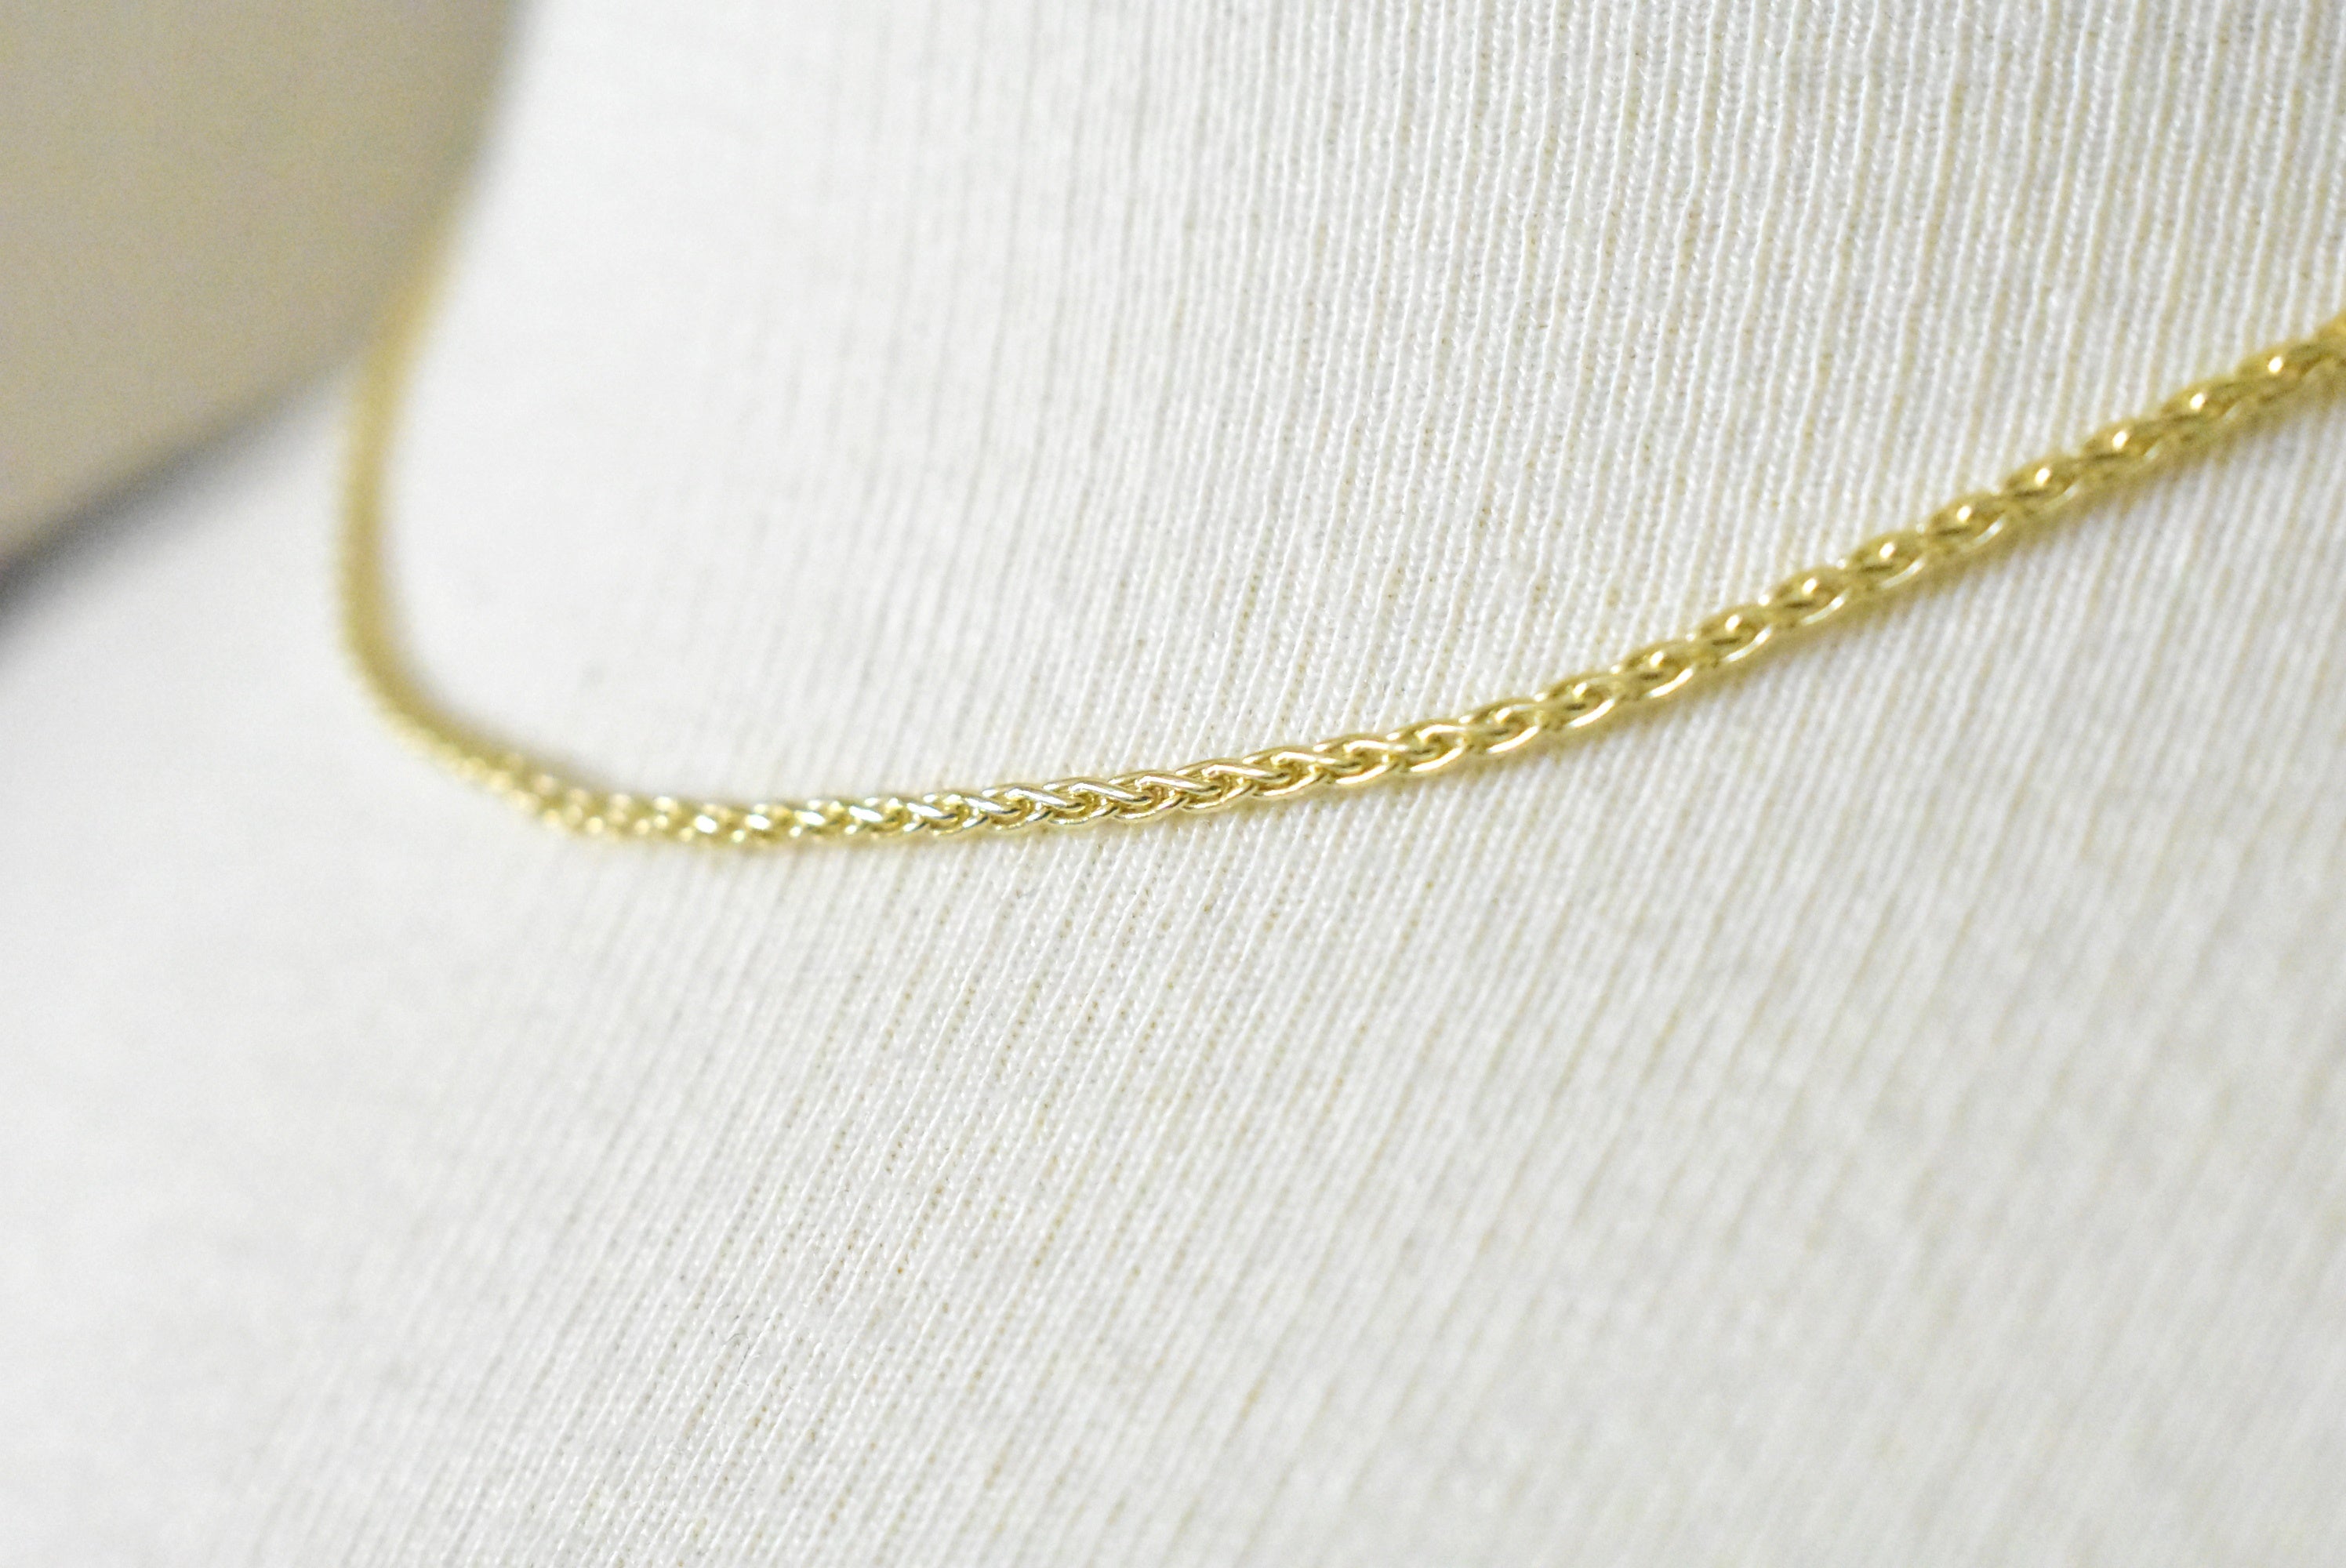 14K Yellow Gold 1.5mm Parisian Wheat Bracelet Anklet Choker Necklace Pendant Chain